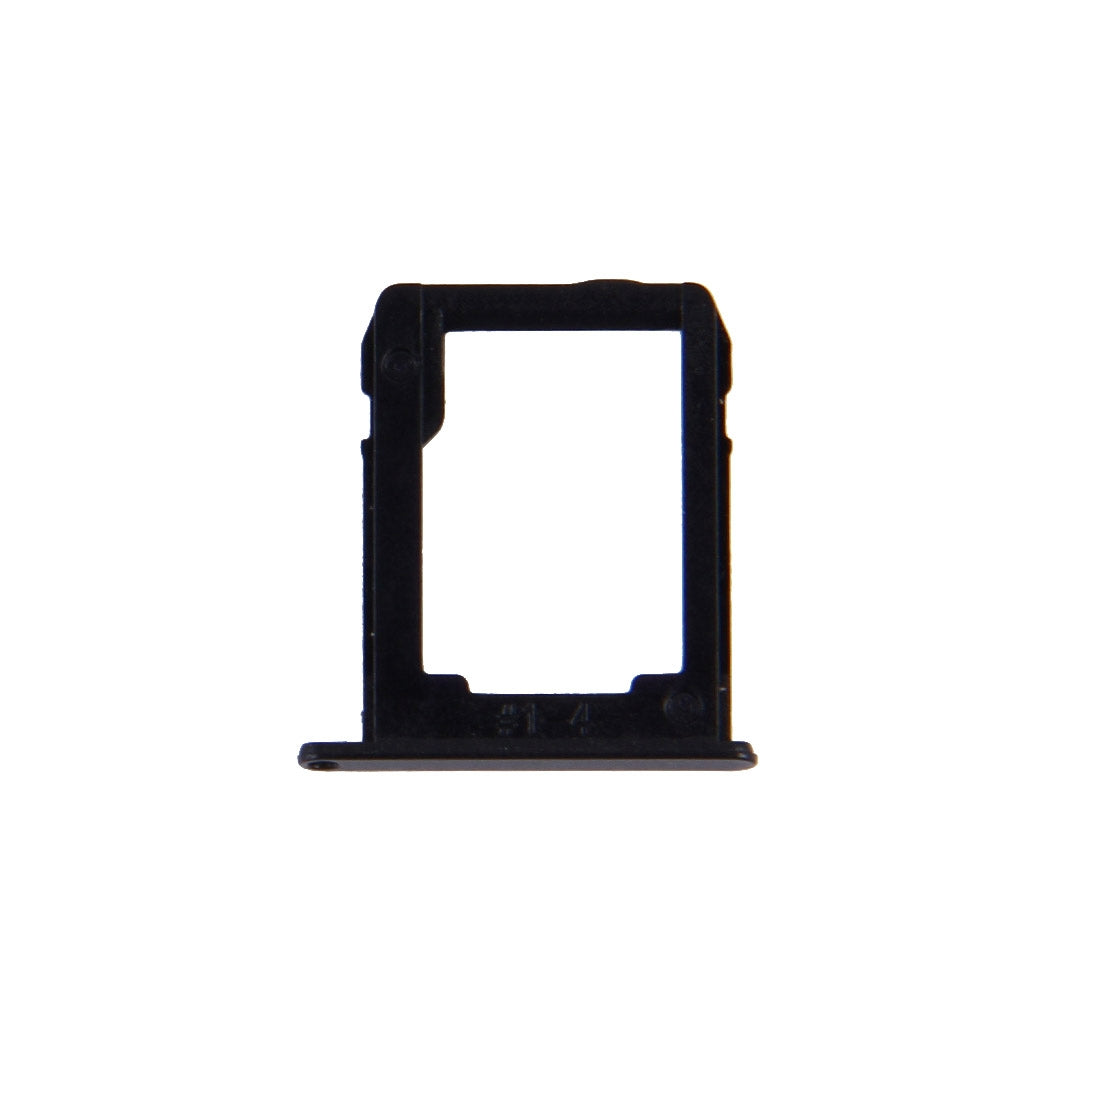 Micro SD Tray Holder Samsung Galaxy Tab S2 8.0 / T715 Black